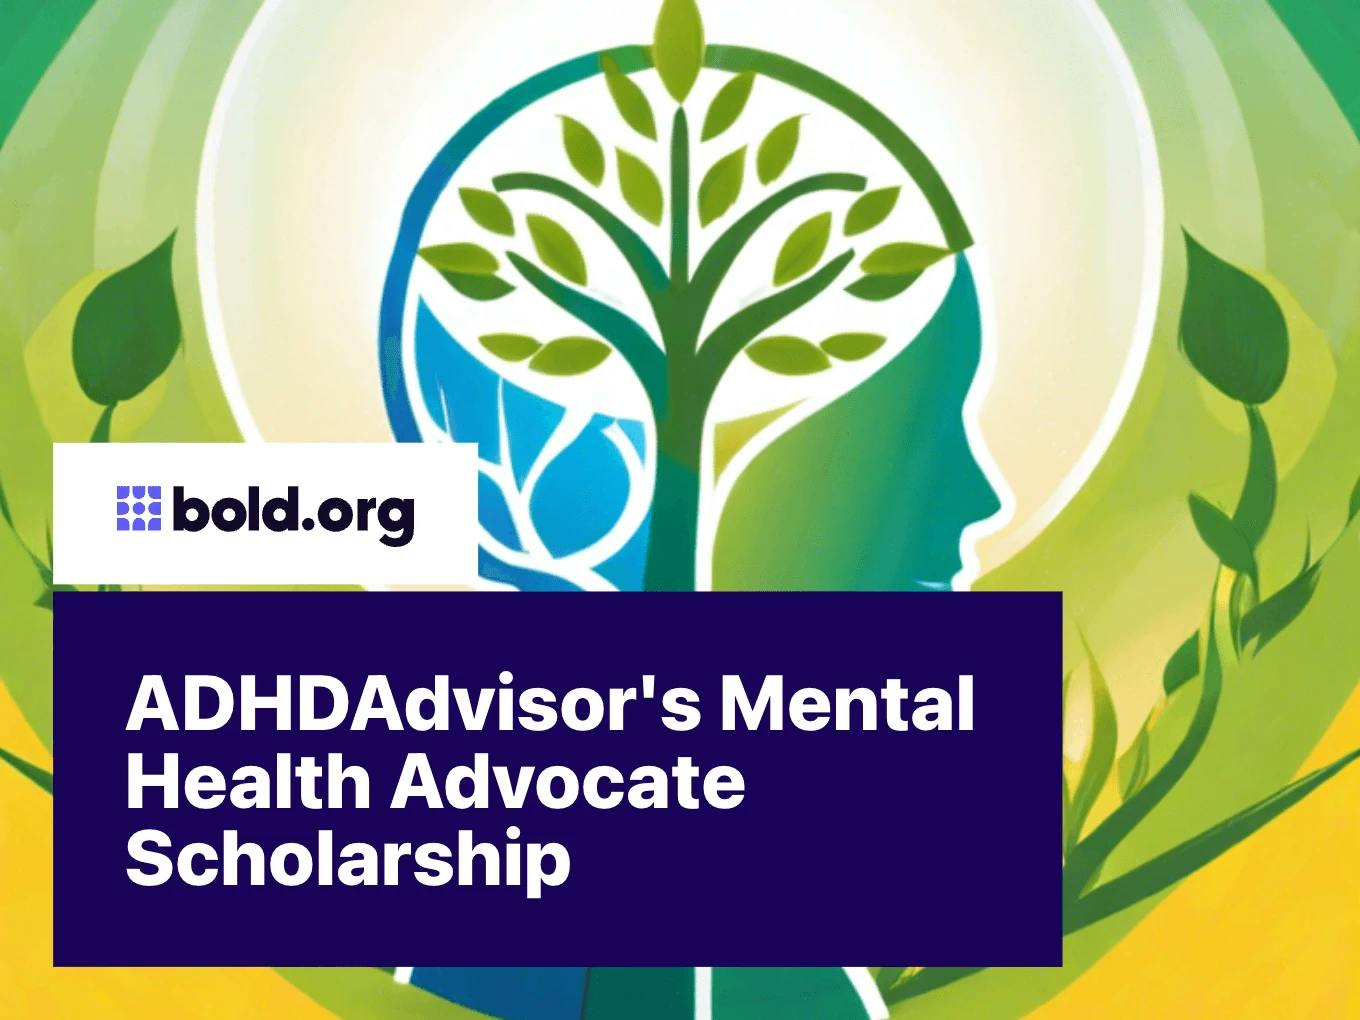 ADHDAdvisor's Mental Health Advocate Scholarship